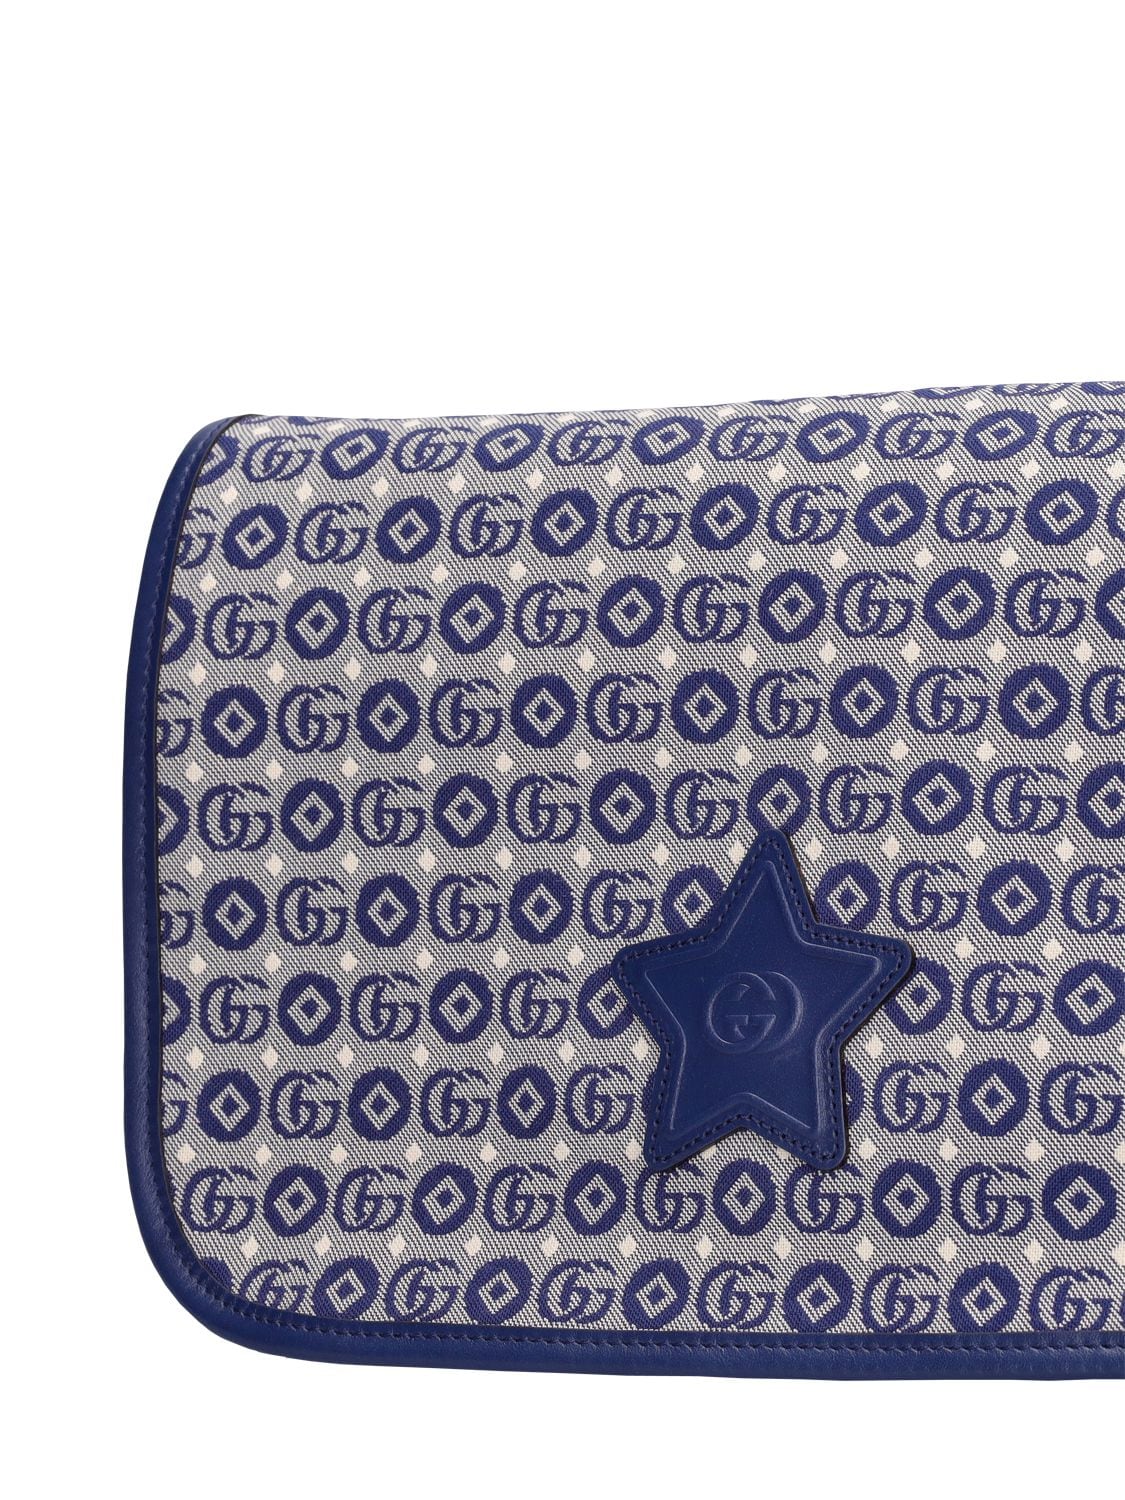 Children's top handle bag in blue cotton jacquard